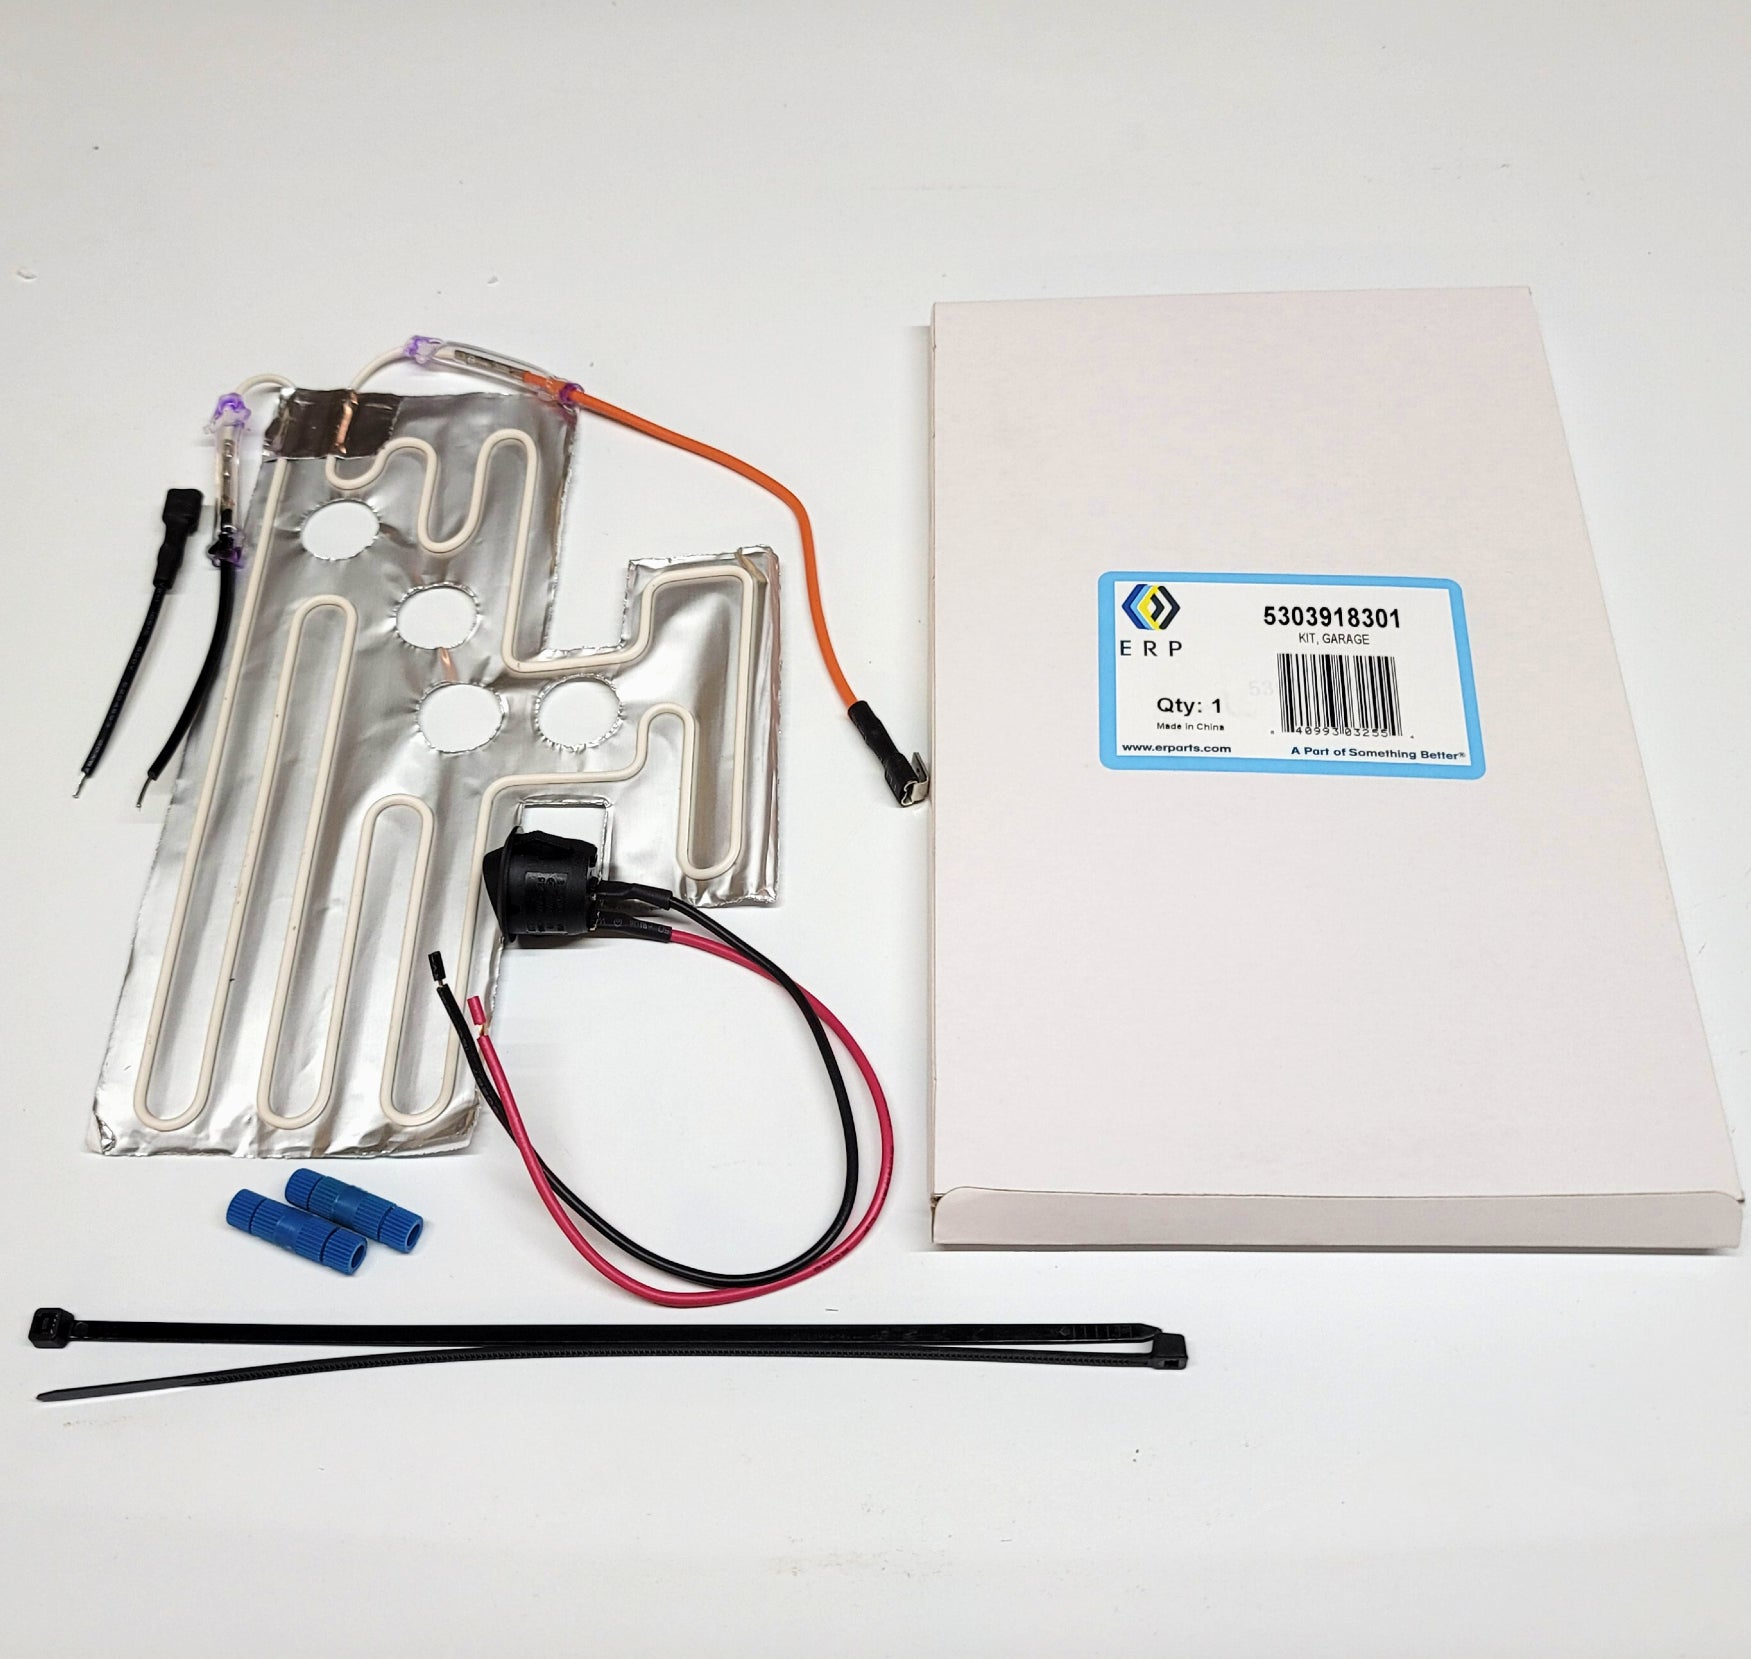 MaksPRO 5303918301 Garage Heater Kit fits Refrigerator 1037646 AH90021